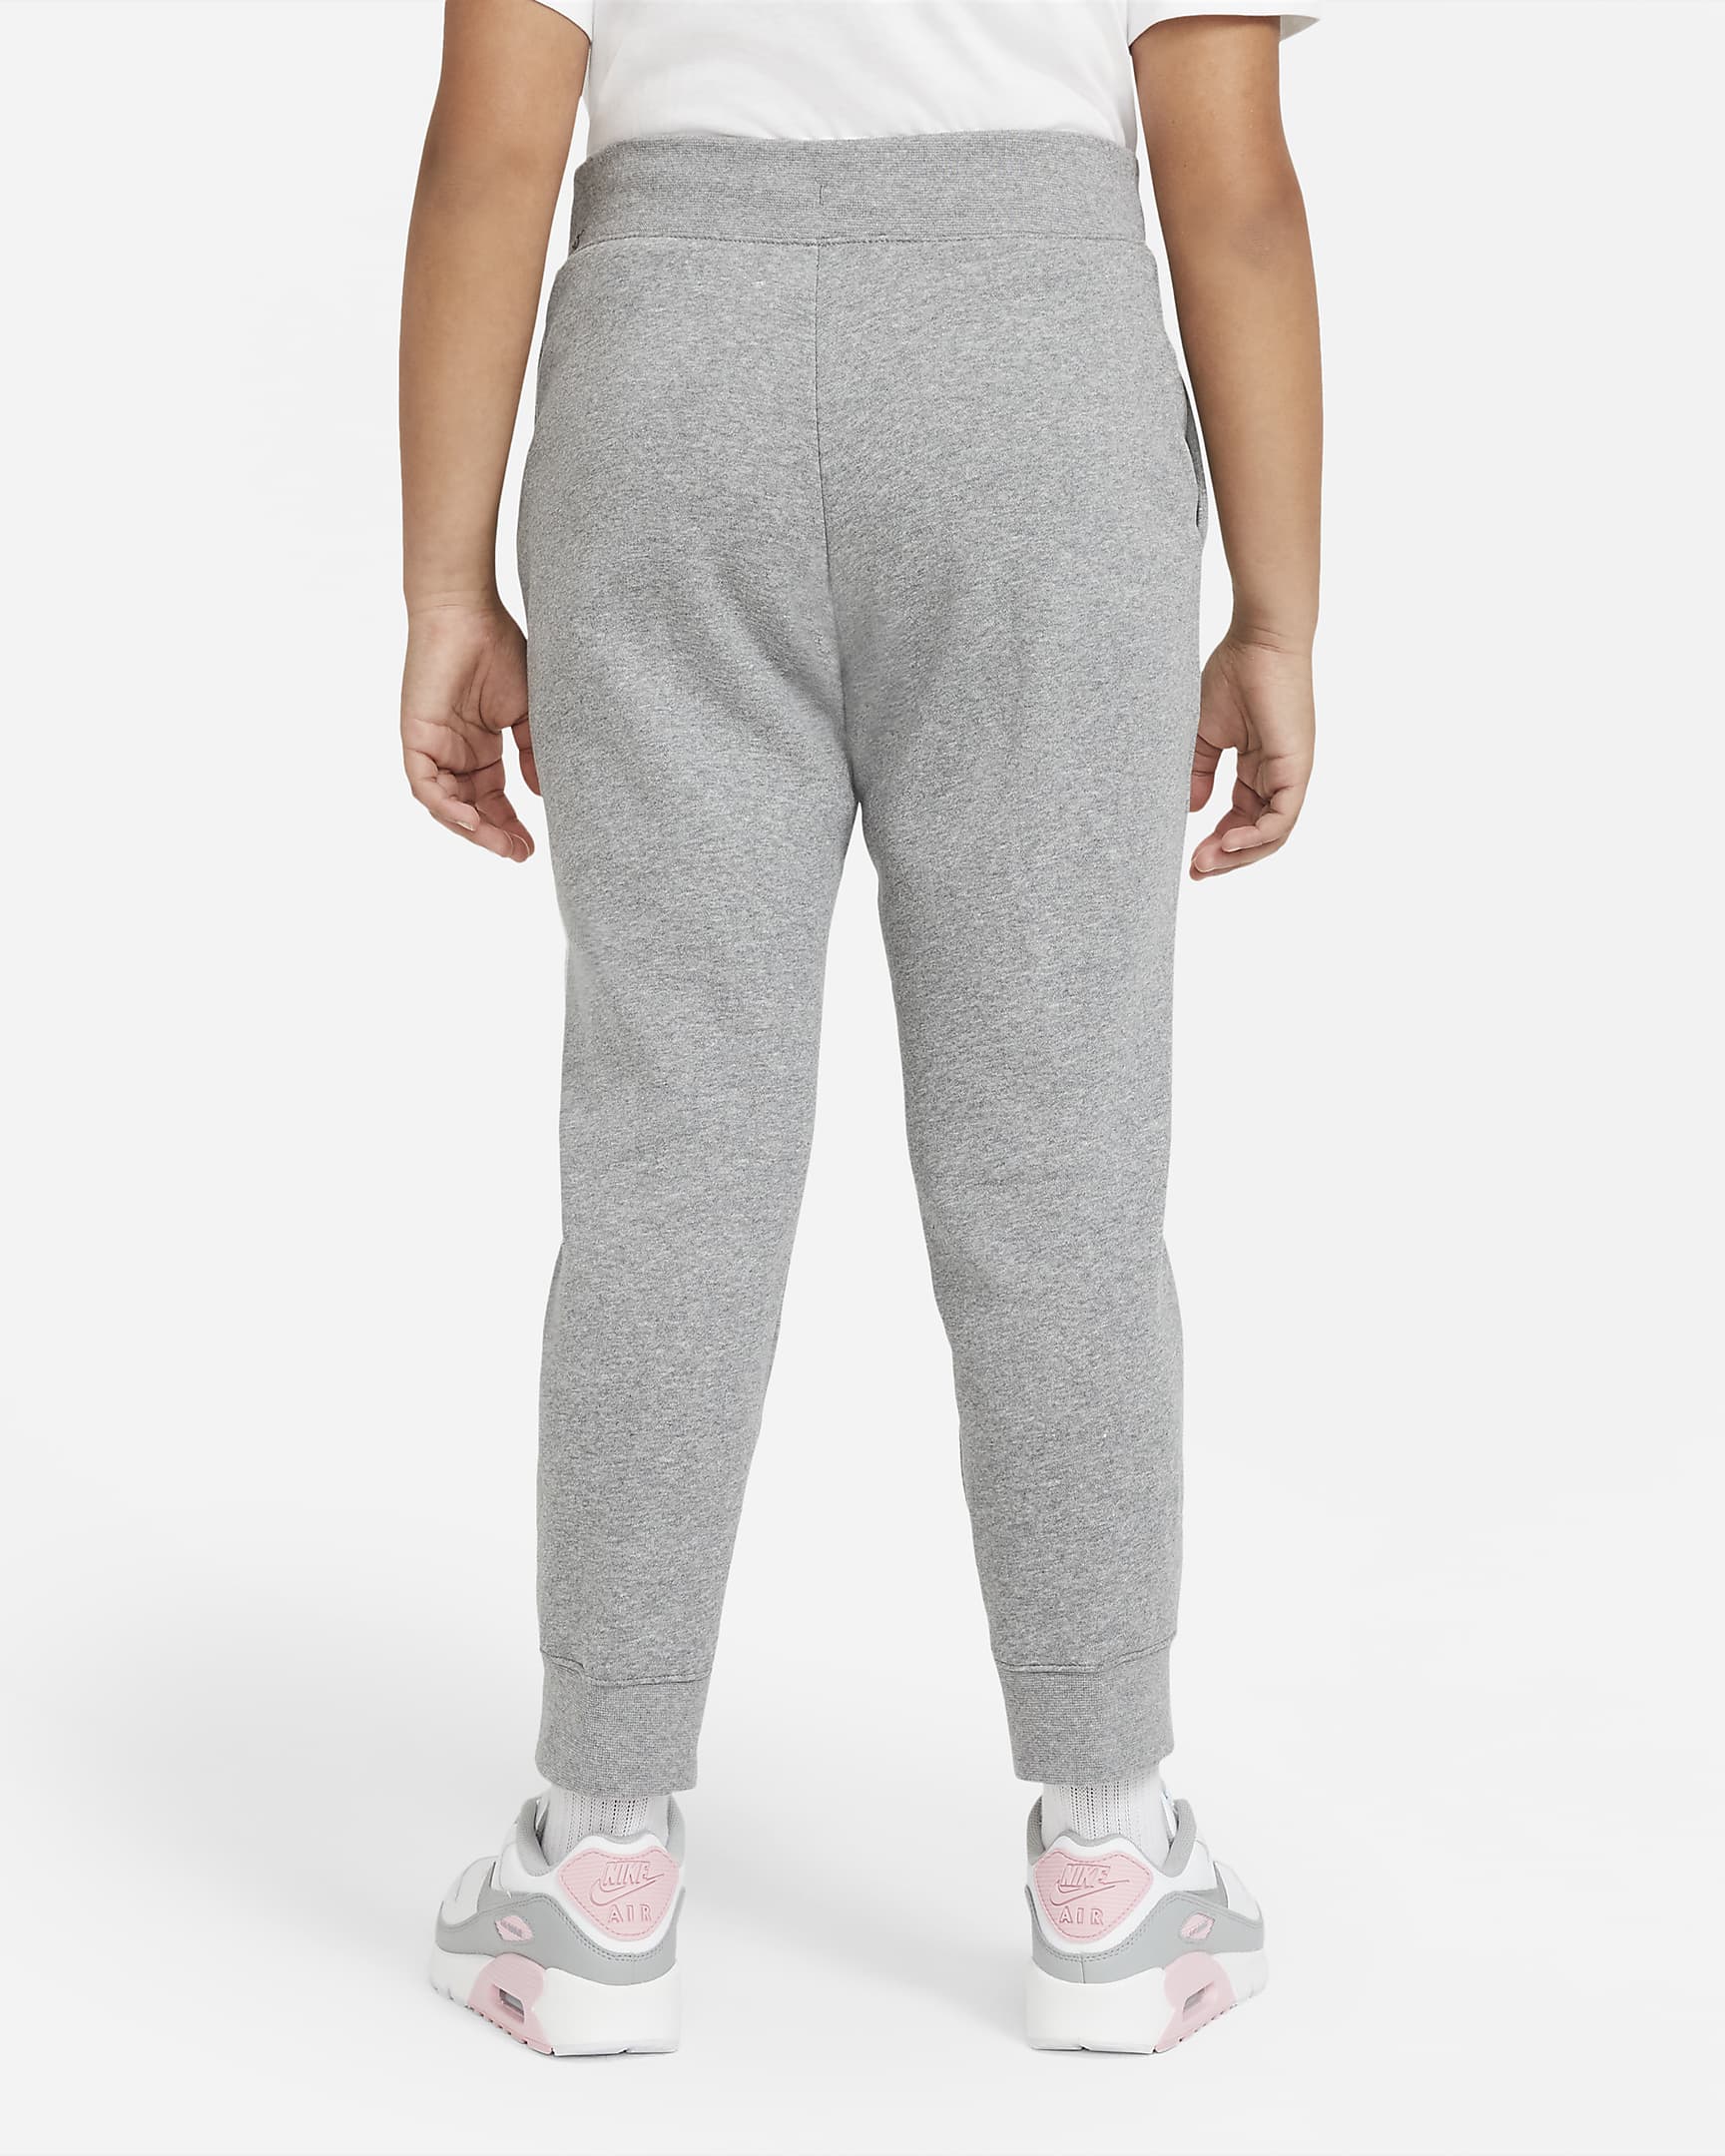 Nike Sportswear Older Kids' (Girls') Trousers (Extended Size). Nike BG